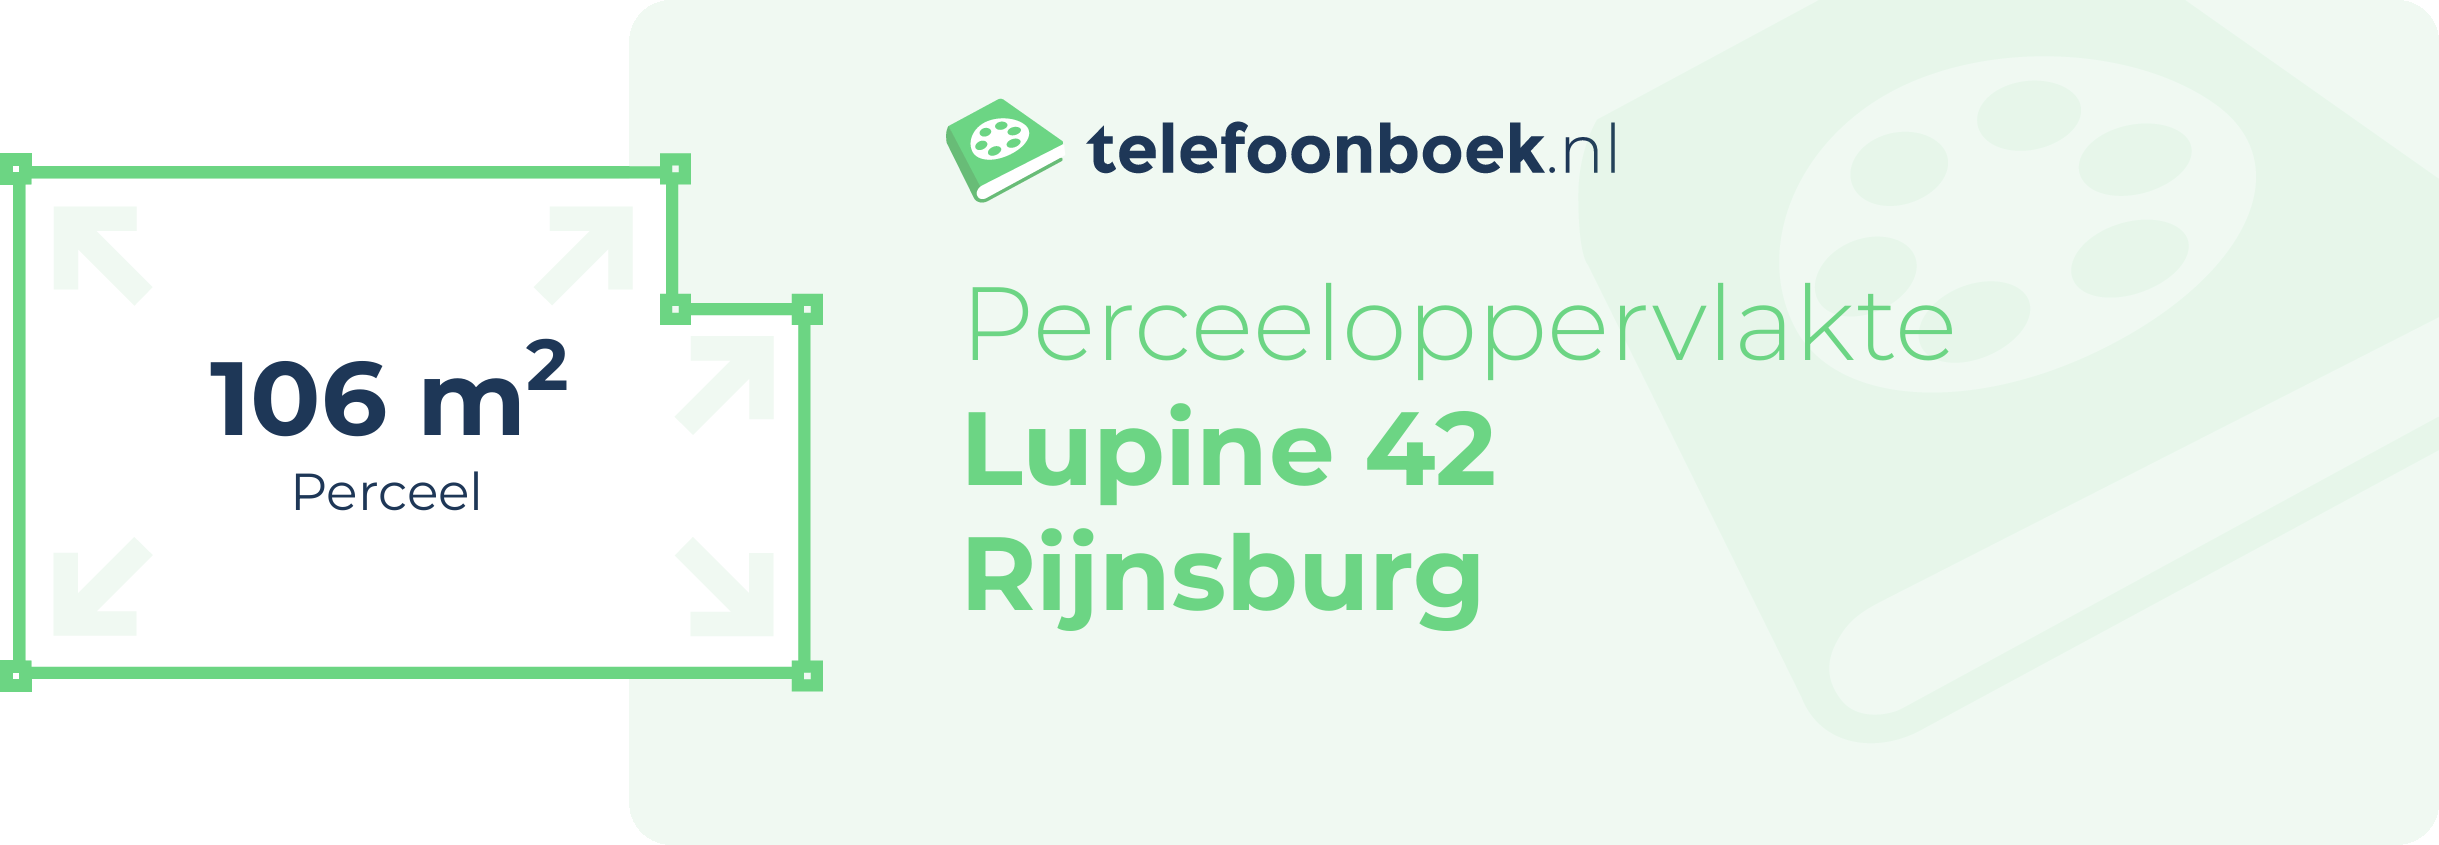 Perceeloppervlakte Lupine 42 Rijnsburg